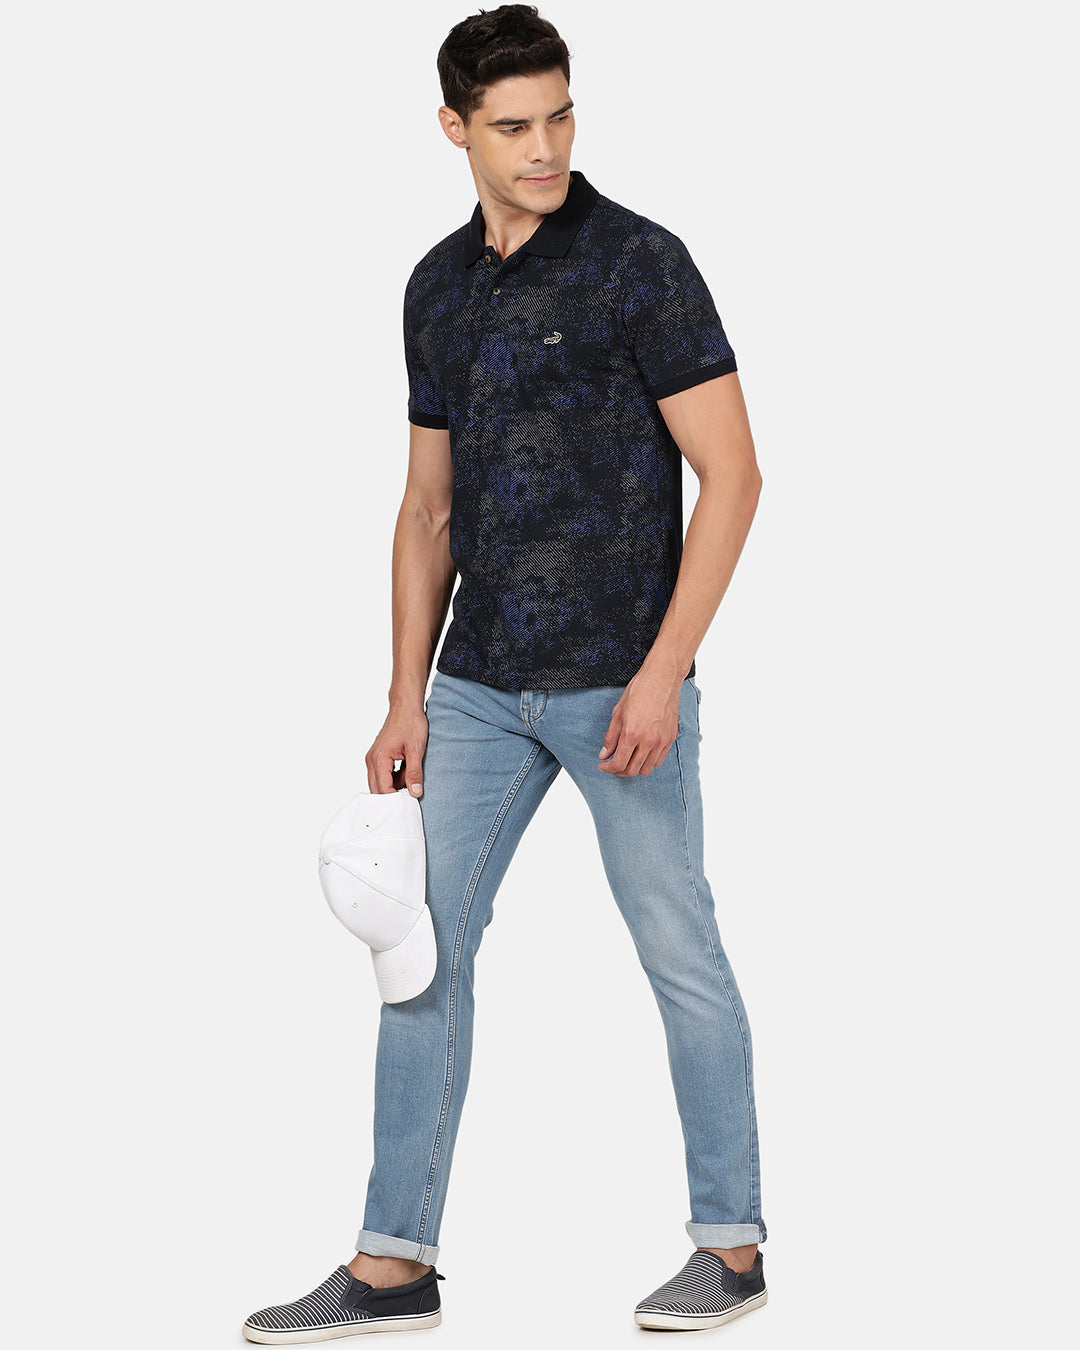 Crocodile Men's Casual Slim Fit Printed Polo Neck Half Sleeve Navy Tshirt Online